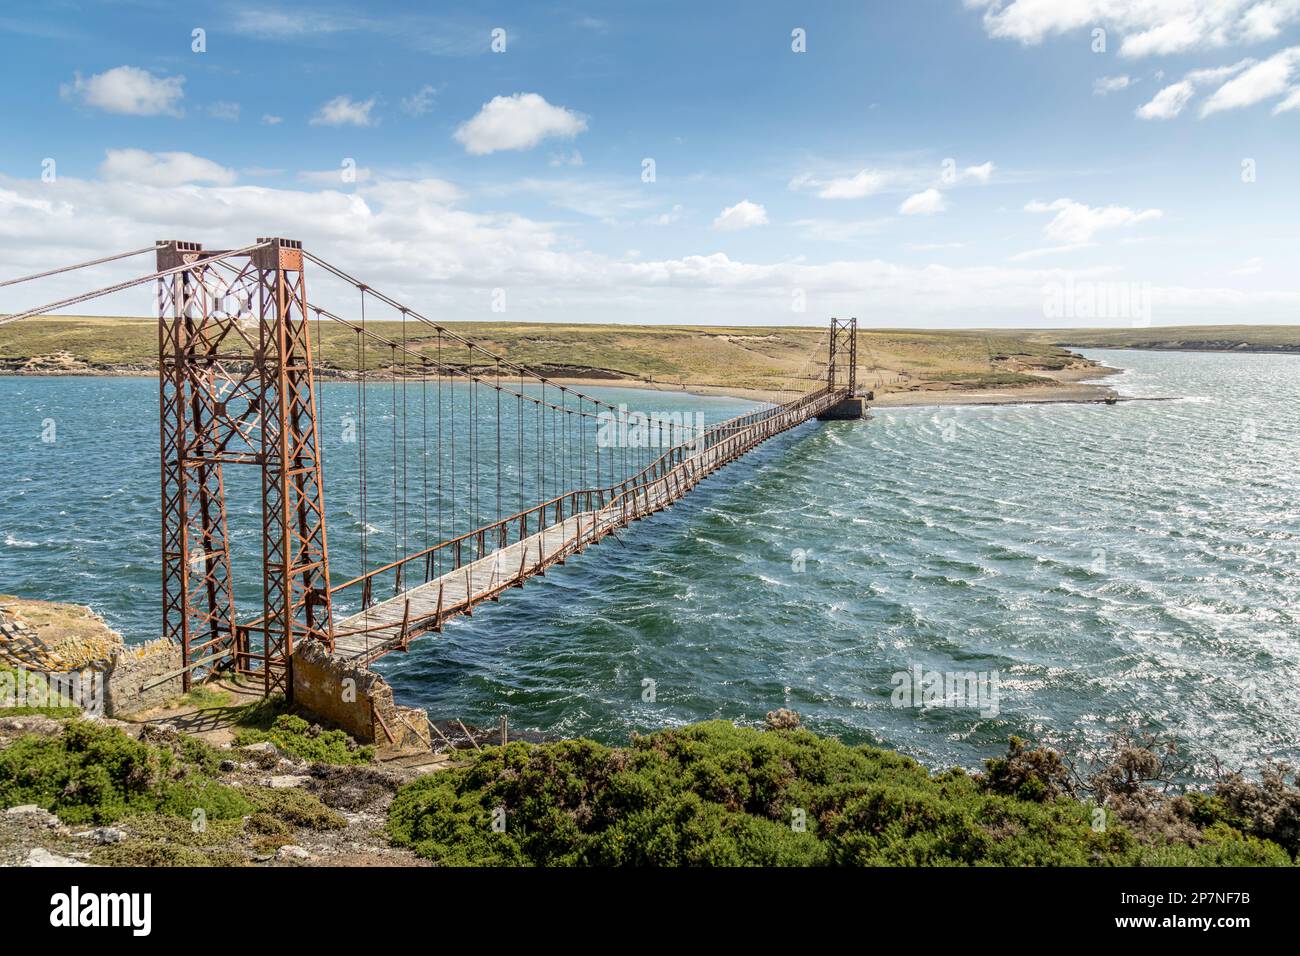 The Bodie Creek Suspension Bridge in the Falkland Islands. Built in 1925. Stock Photo